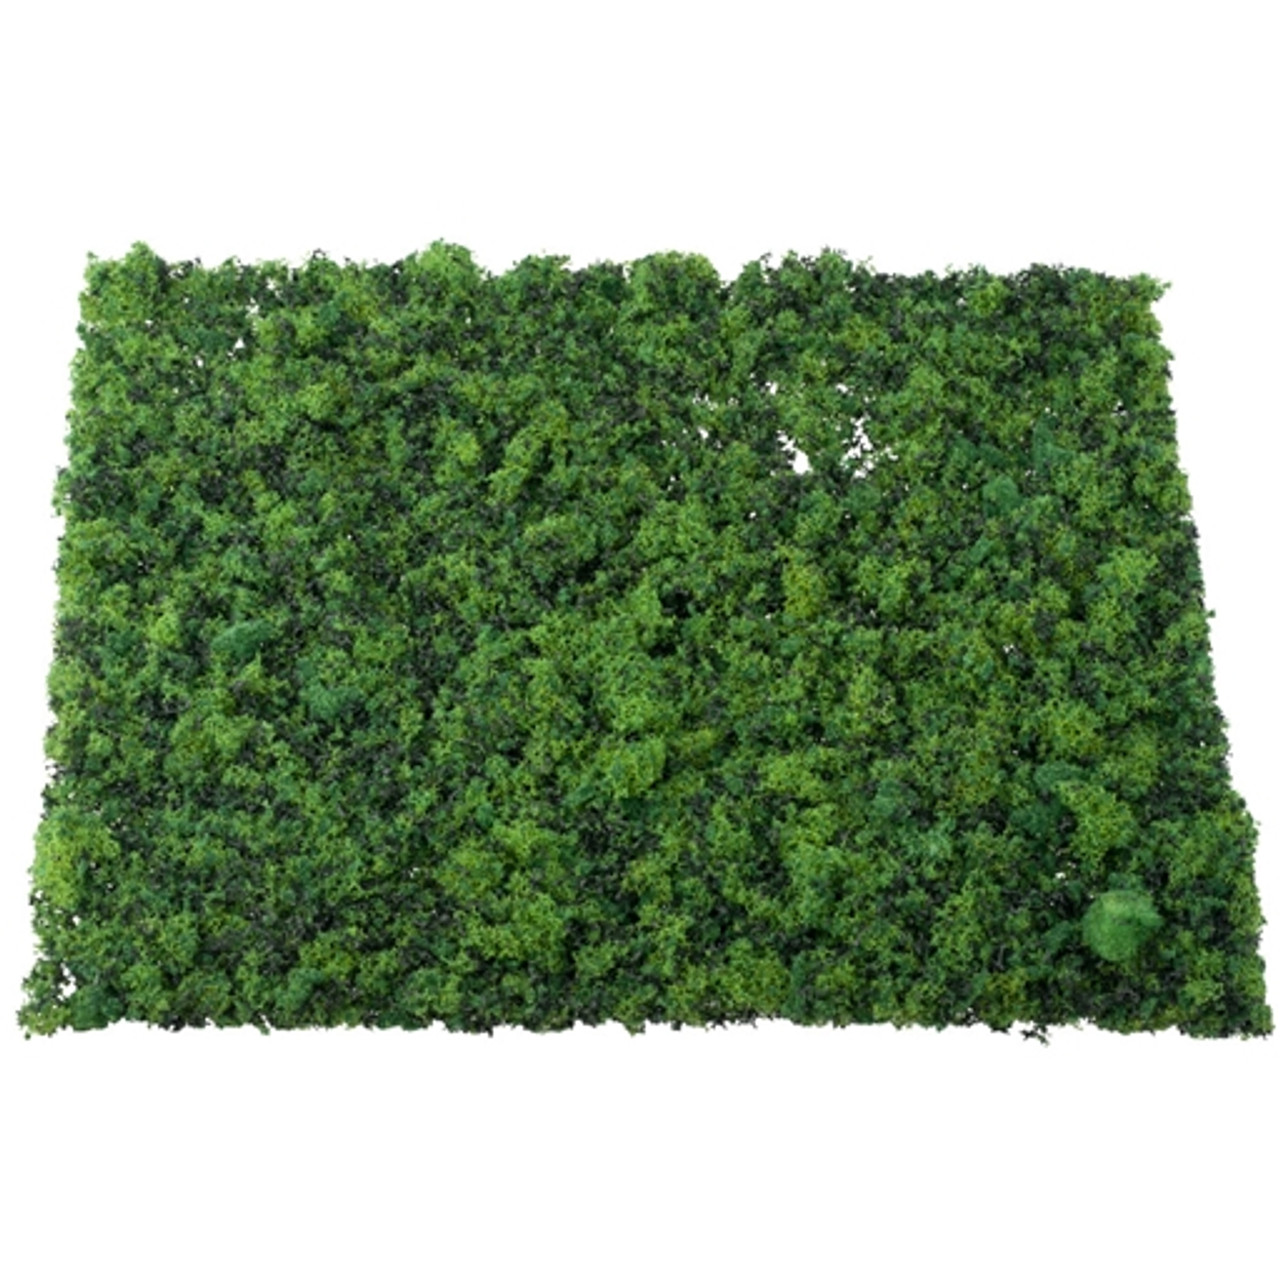 Green Foliage Mat